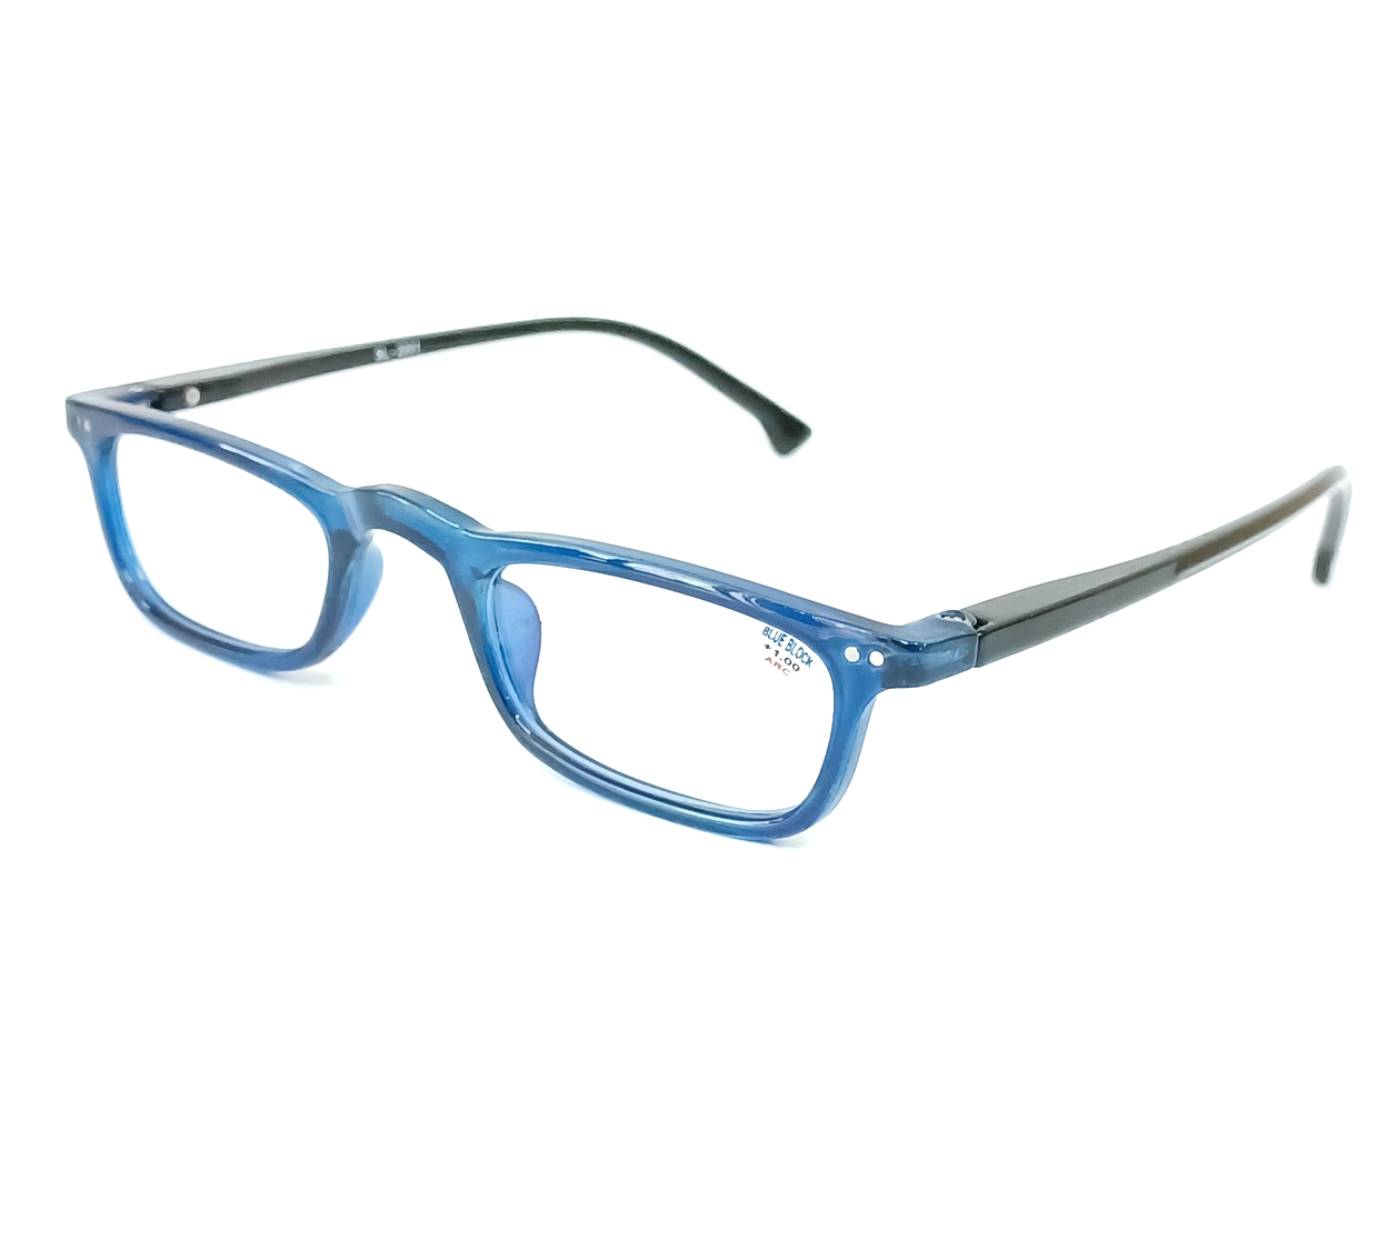 Computer Reading Glasses with Anti Glare Blue Light Lenses